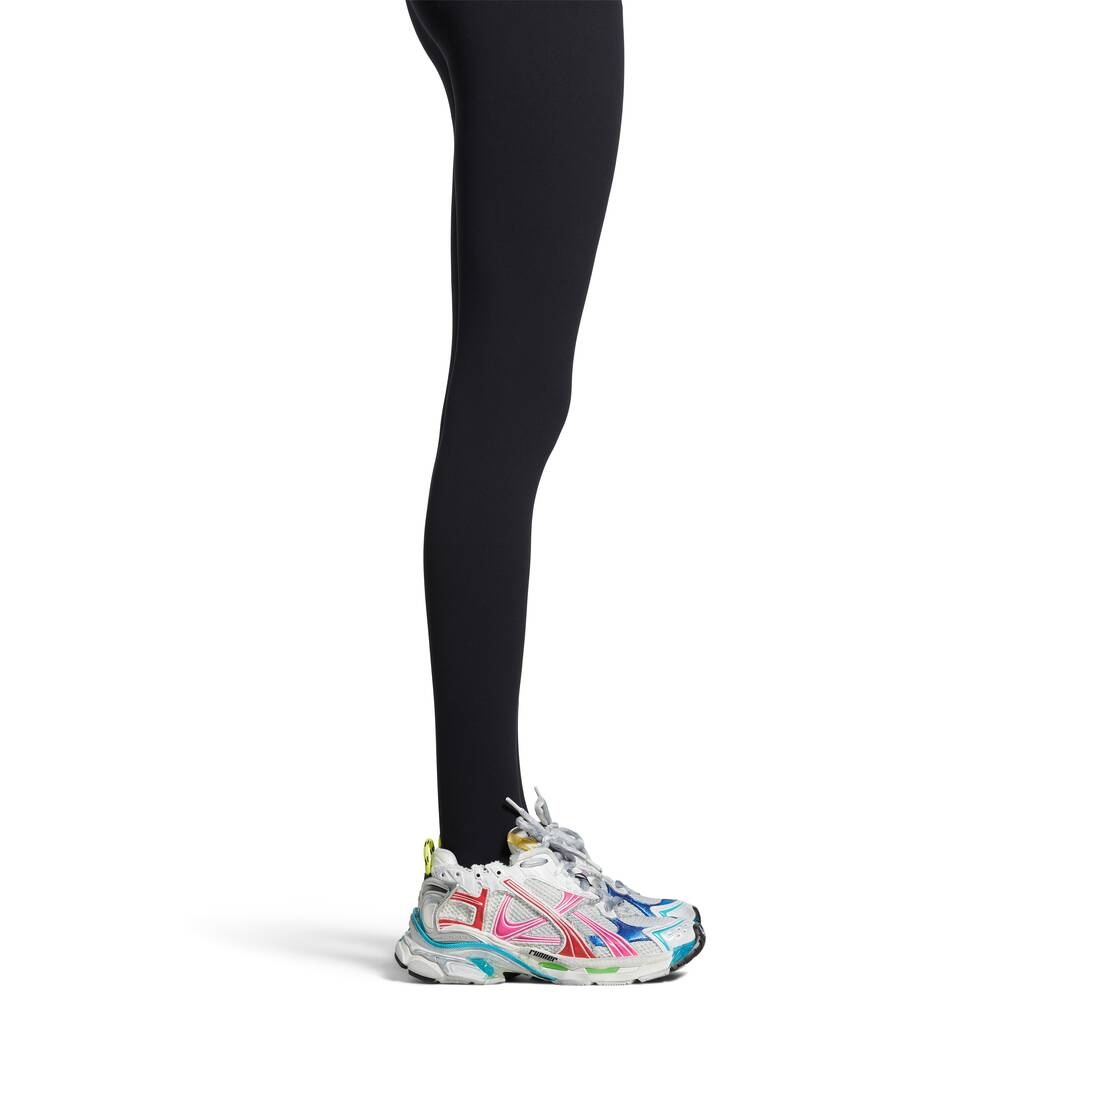 Women's Runner Sneaker in Multicolored - 9